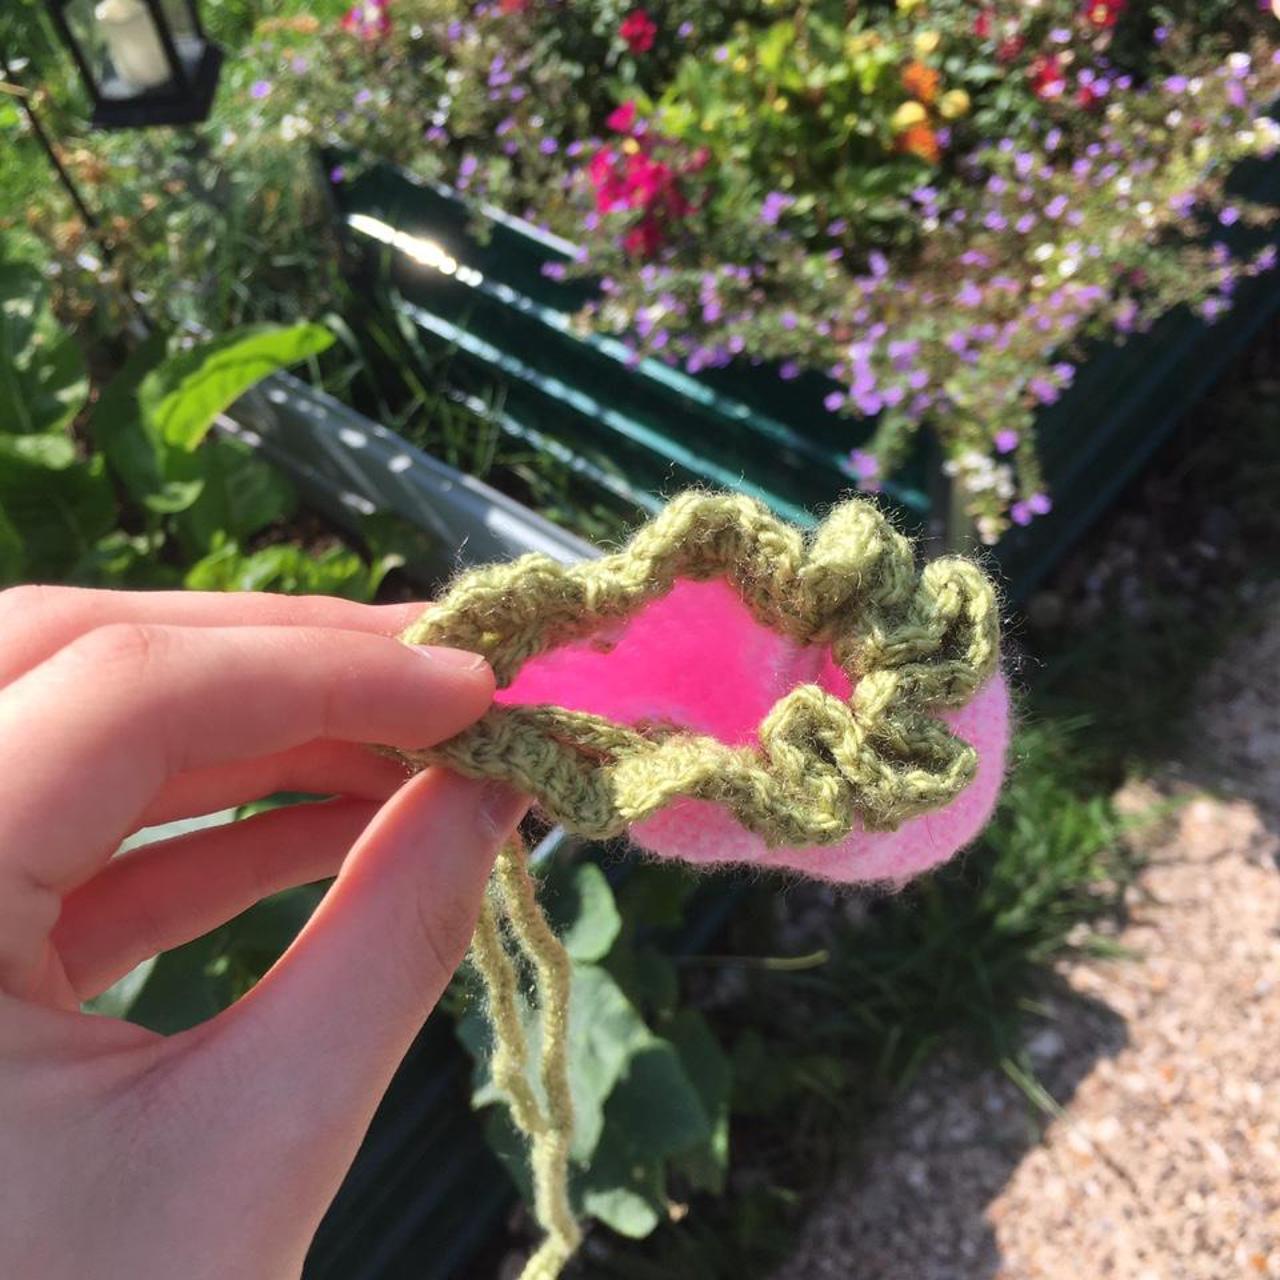 Product Image 2 - Crochet rose petal bag:)
+coin purse